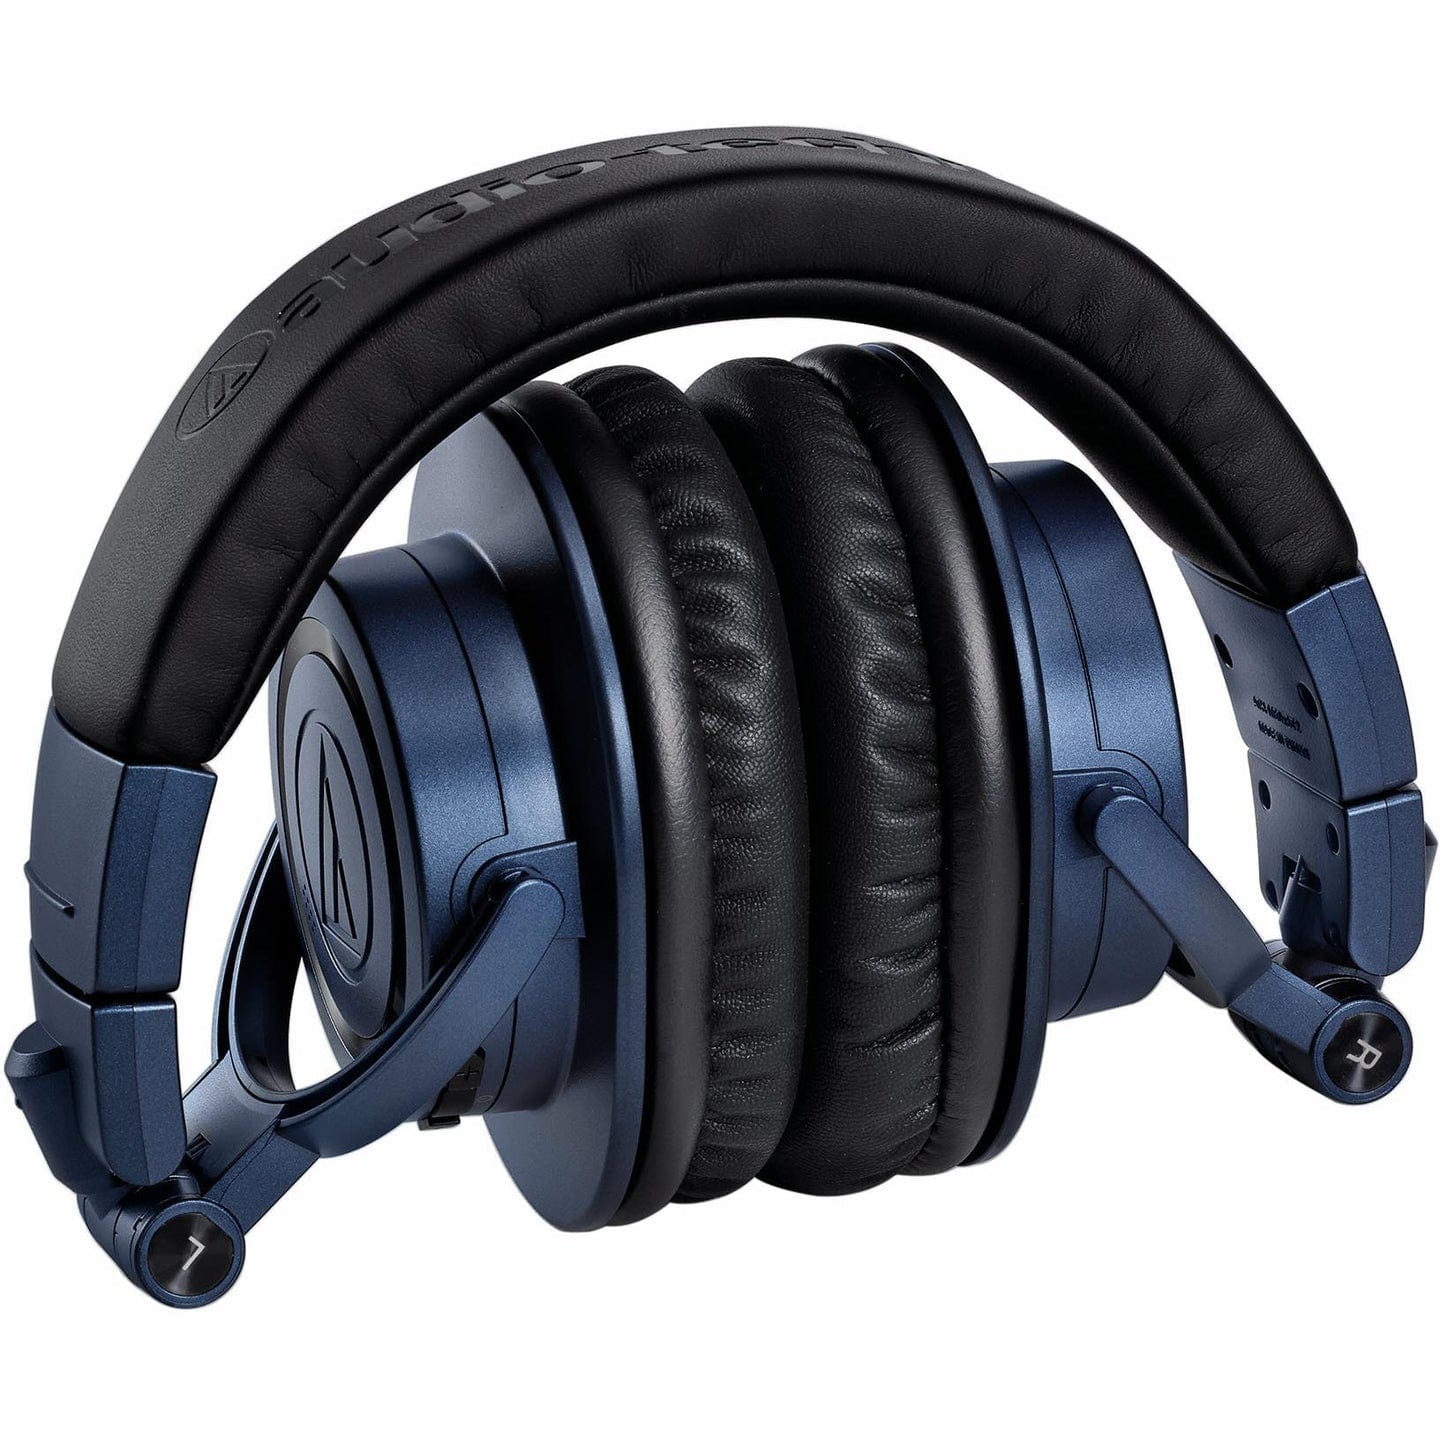 Audio-Technical Wireless Over-Ear Headphones (Deep Sea Blue)